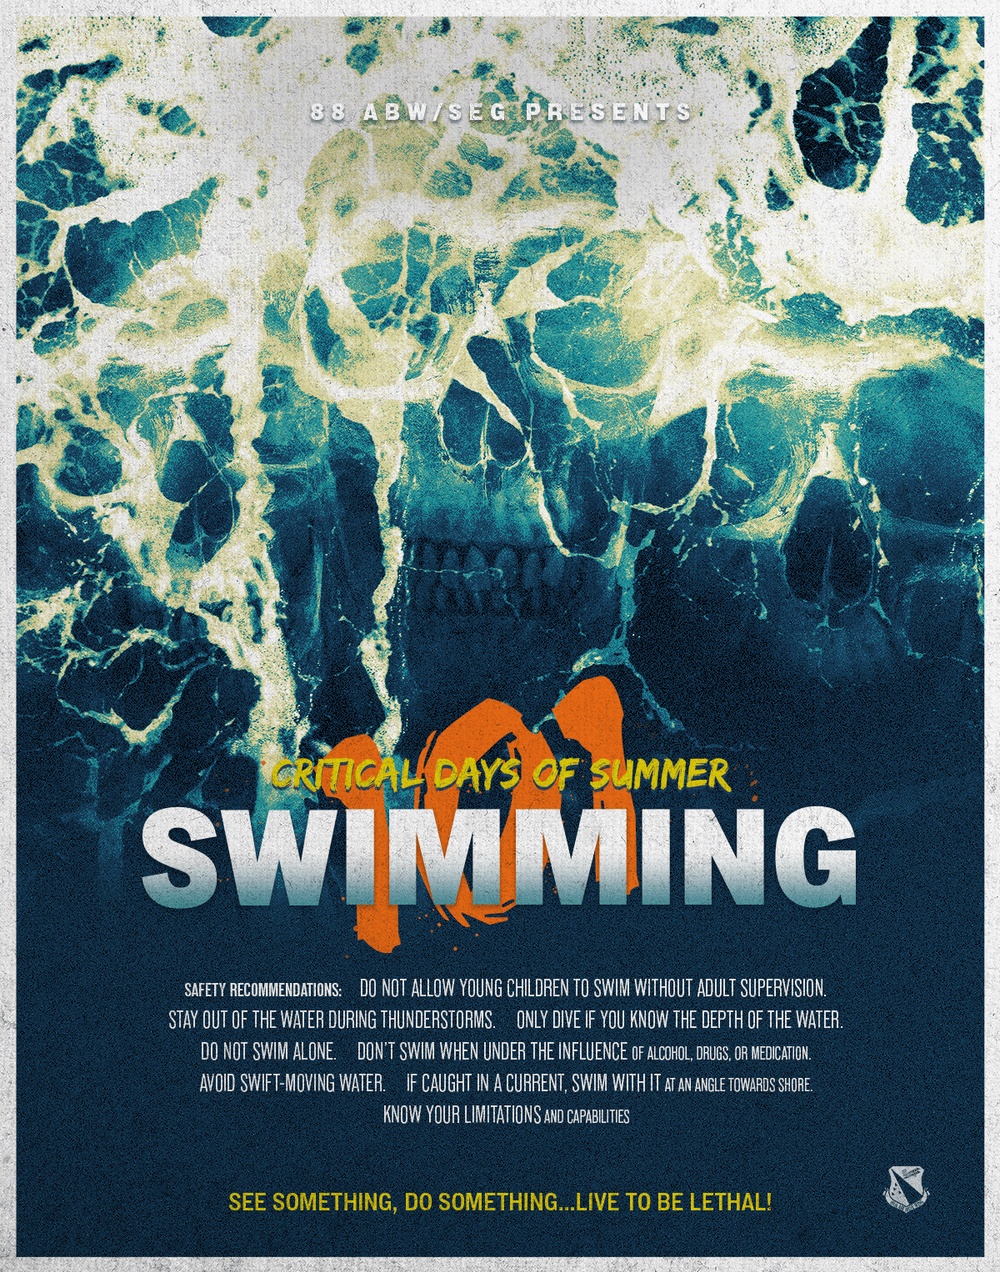 88ABW/SEG presents: 101 Critical Days of Summer - Swimming